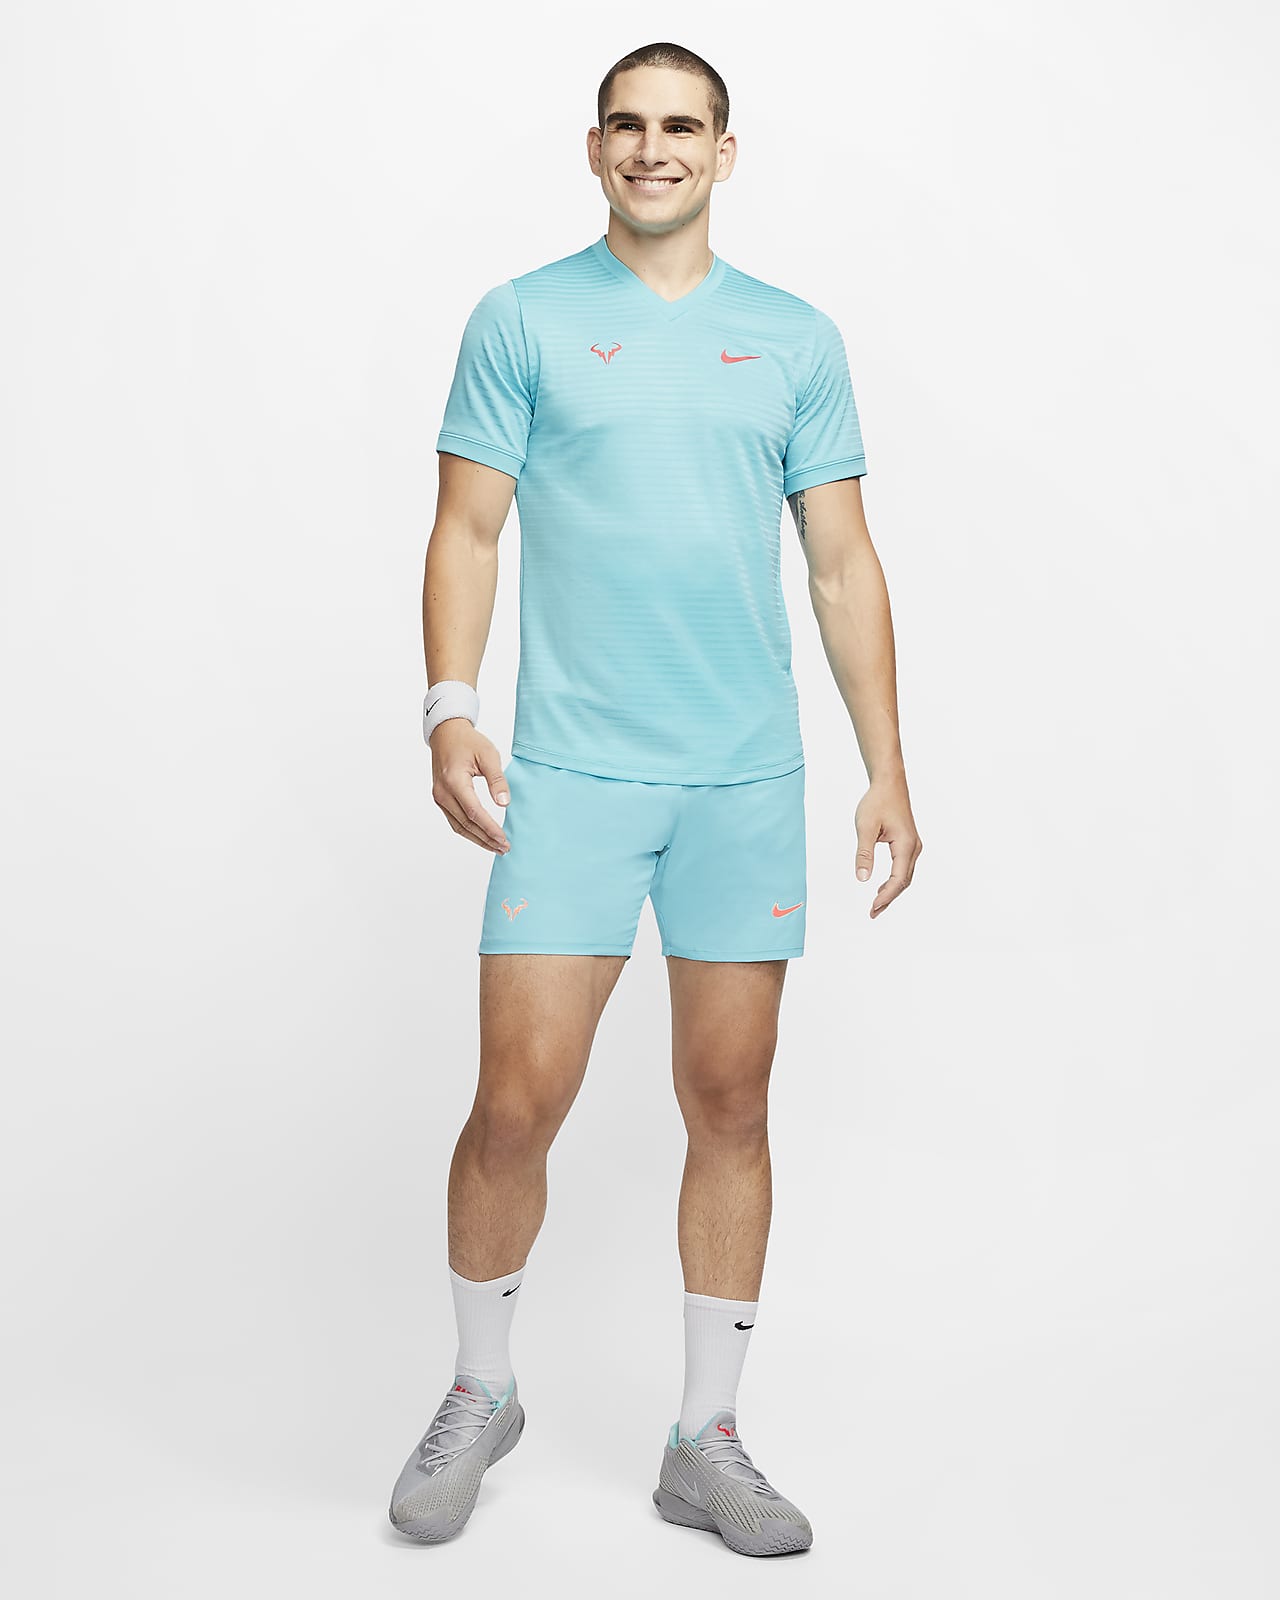 Short-Sleeve Tennis Top. Nike PT